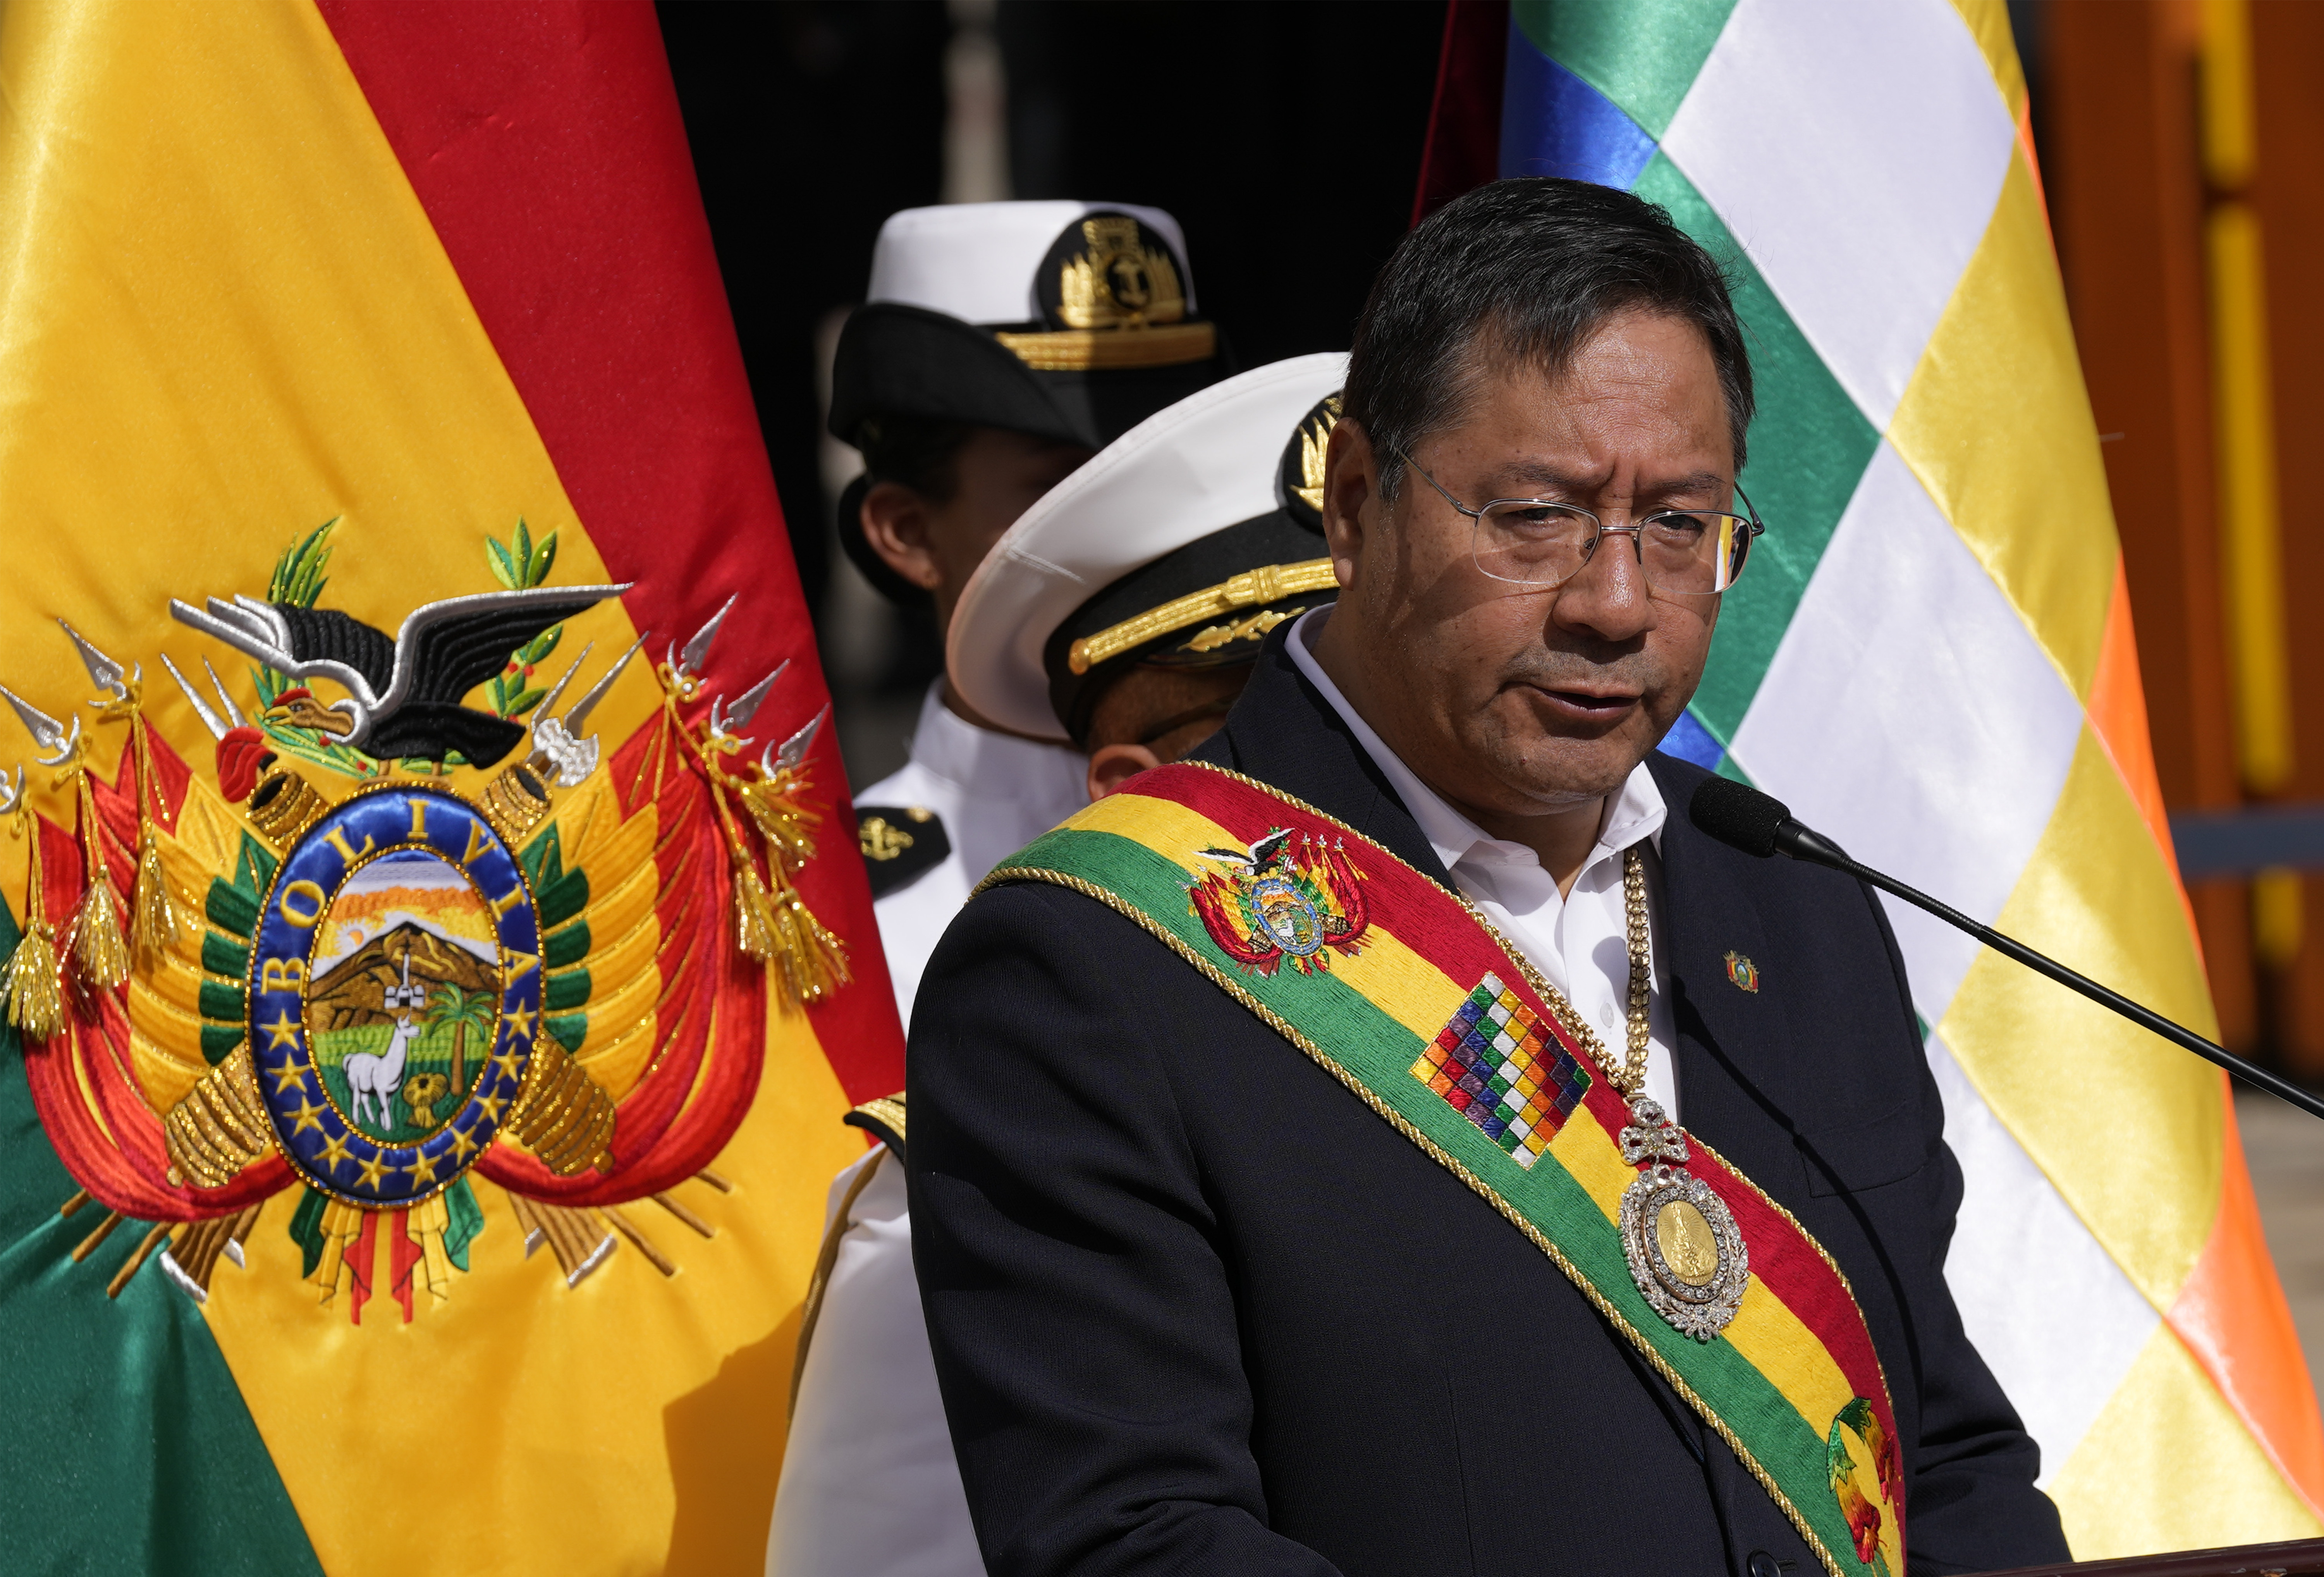 La CIDH denunció la falta de transparencia de la Justicia de Bolivia: “Se maneja desde el poder político de turno”